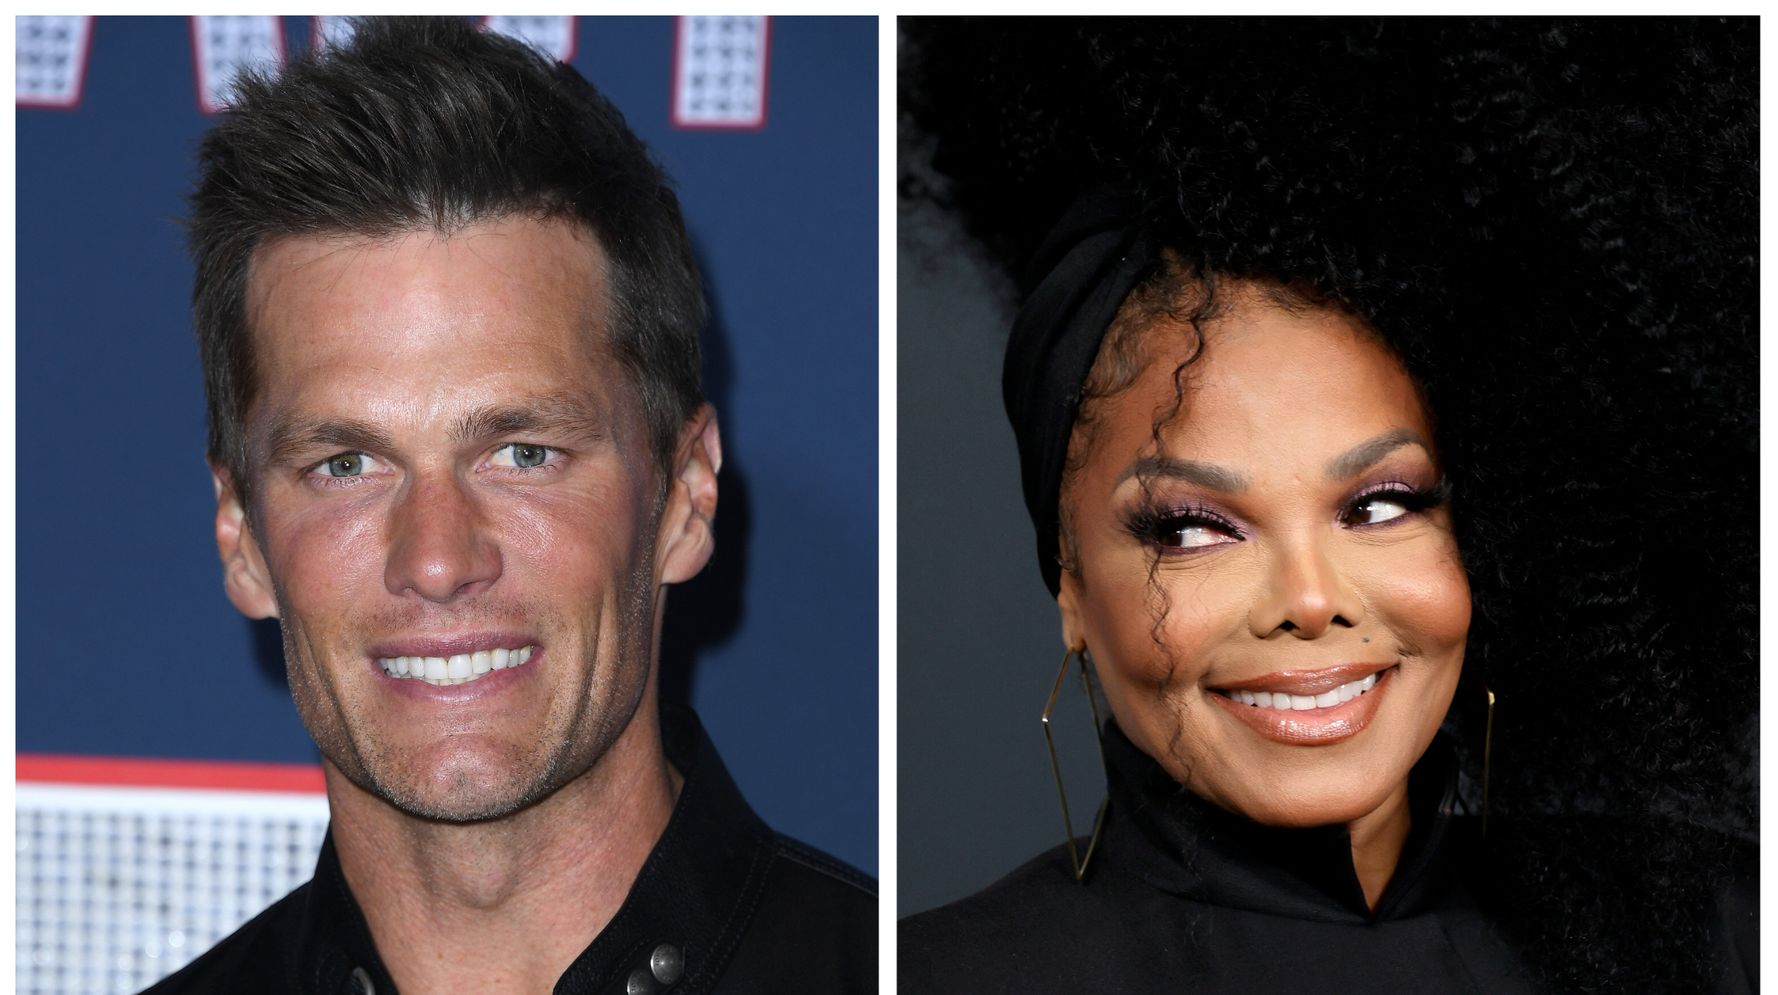 Tom Brady says Janet Jackson's infamous Super Bowl incident was